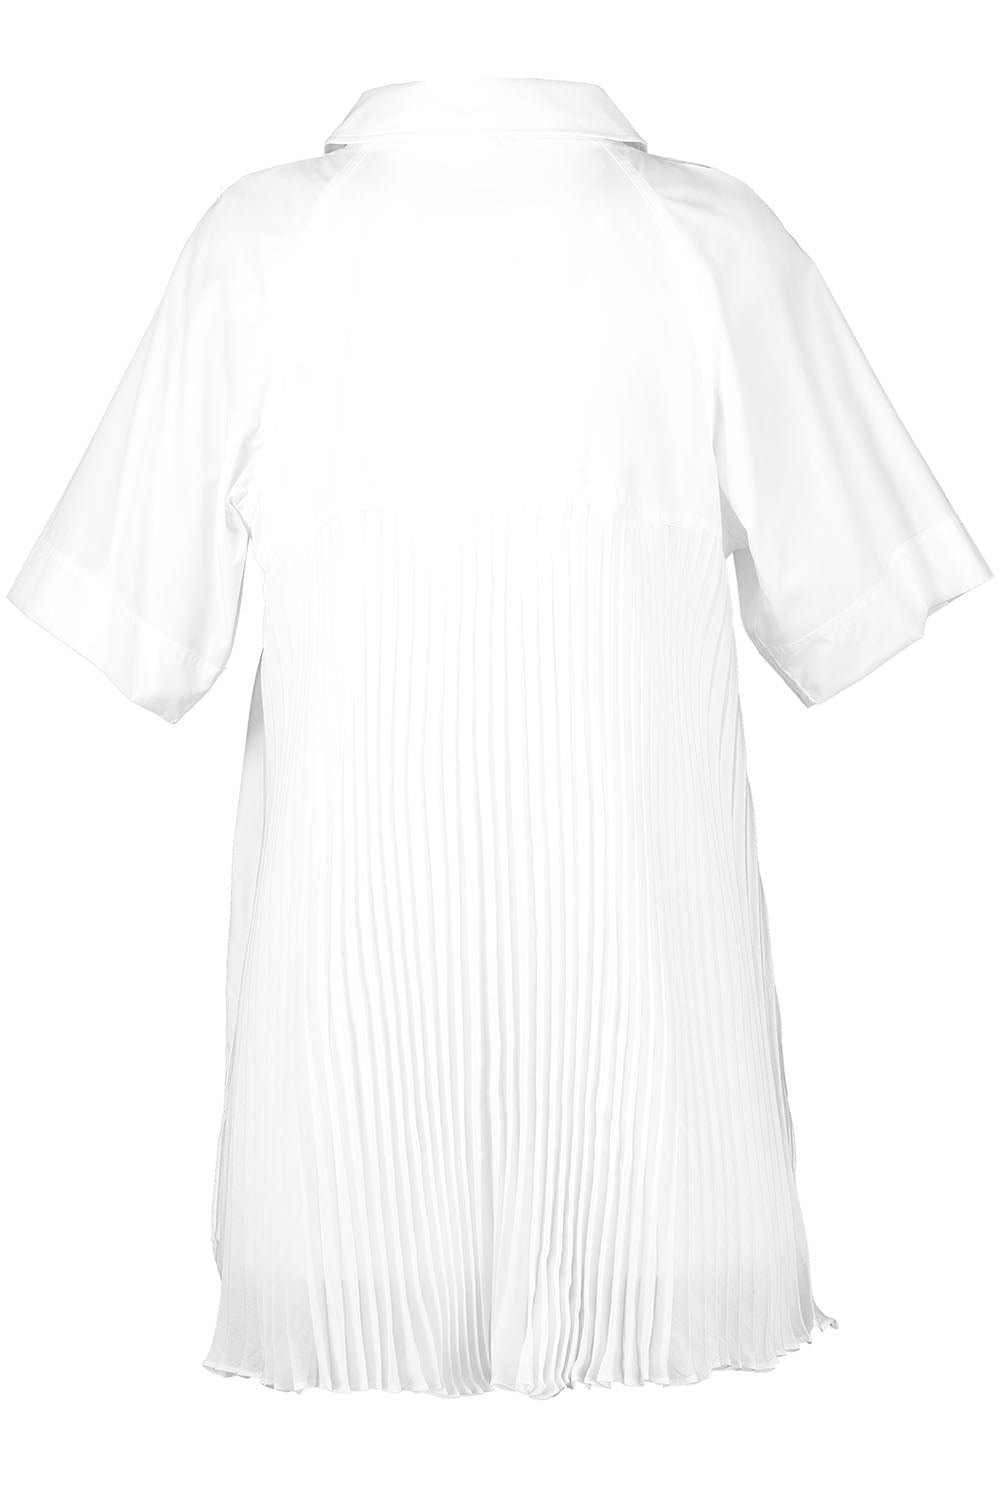 Blanche Shirt Dress CLOTHINGDRESSCASUAL SIMKHAI   